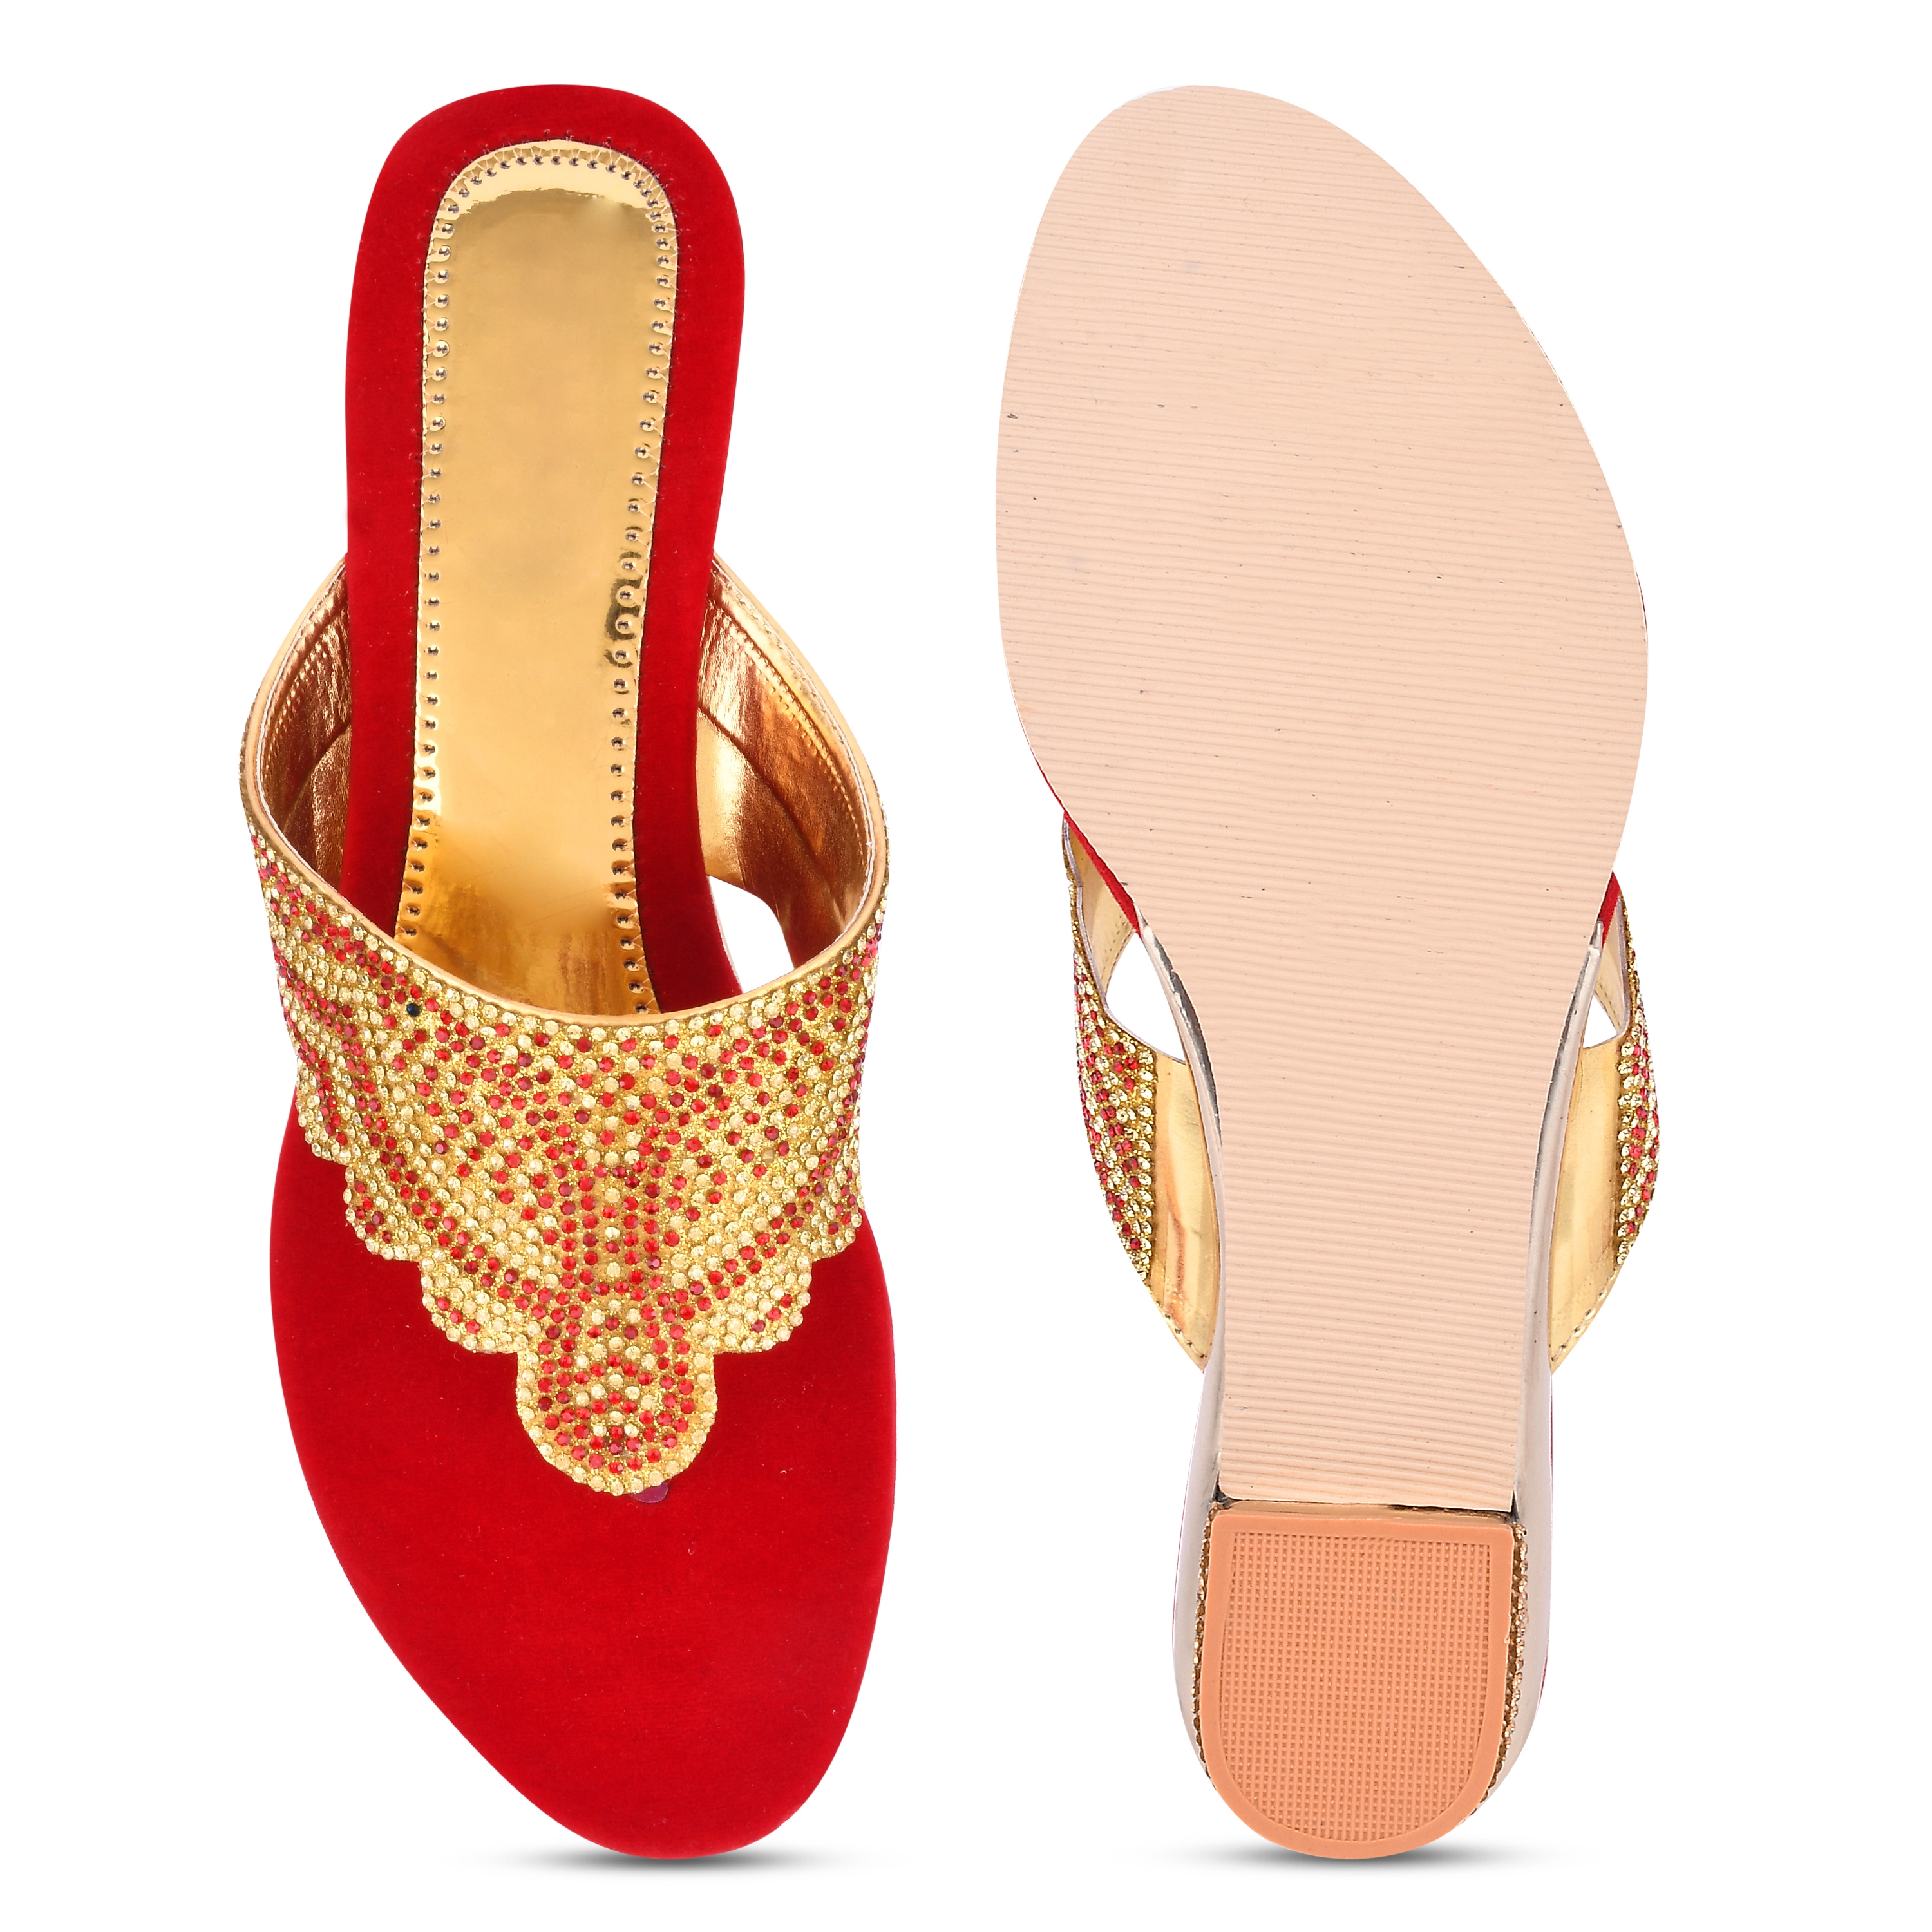 Buy Little Footwear Women Wedding Bridal Fashion Stylish Heel Sandal  (LF-104-RED-5) at Amazon.in